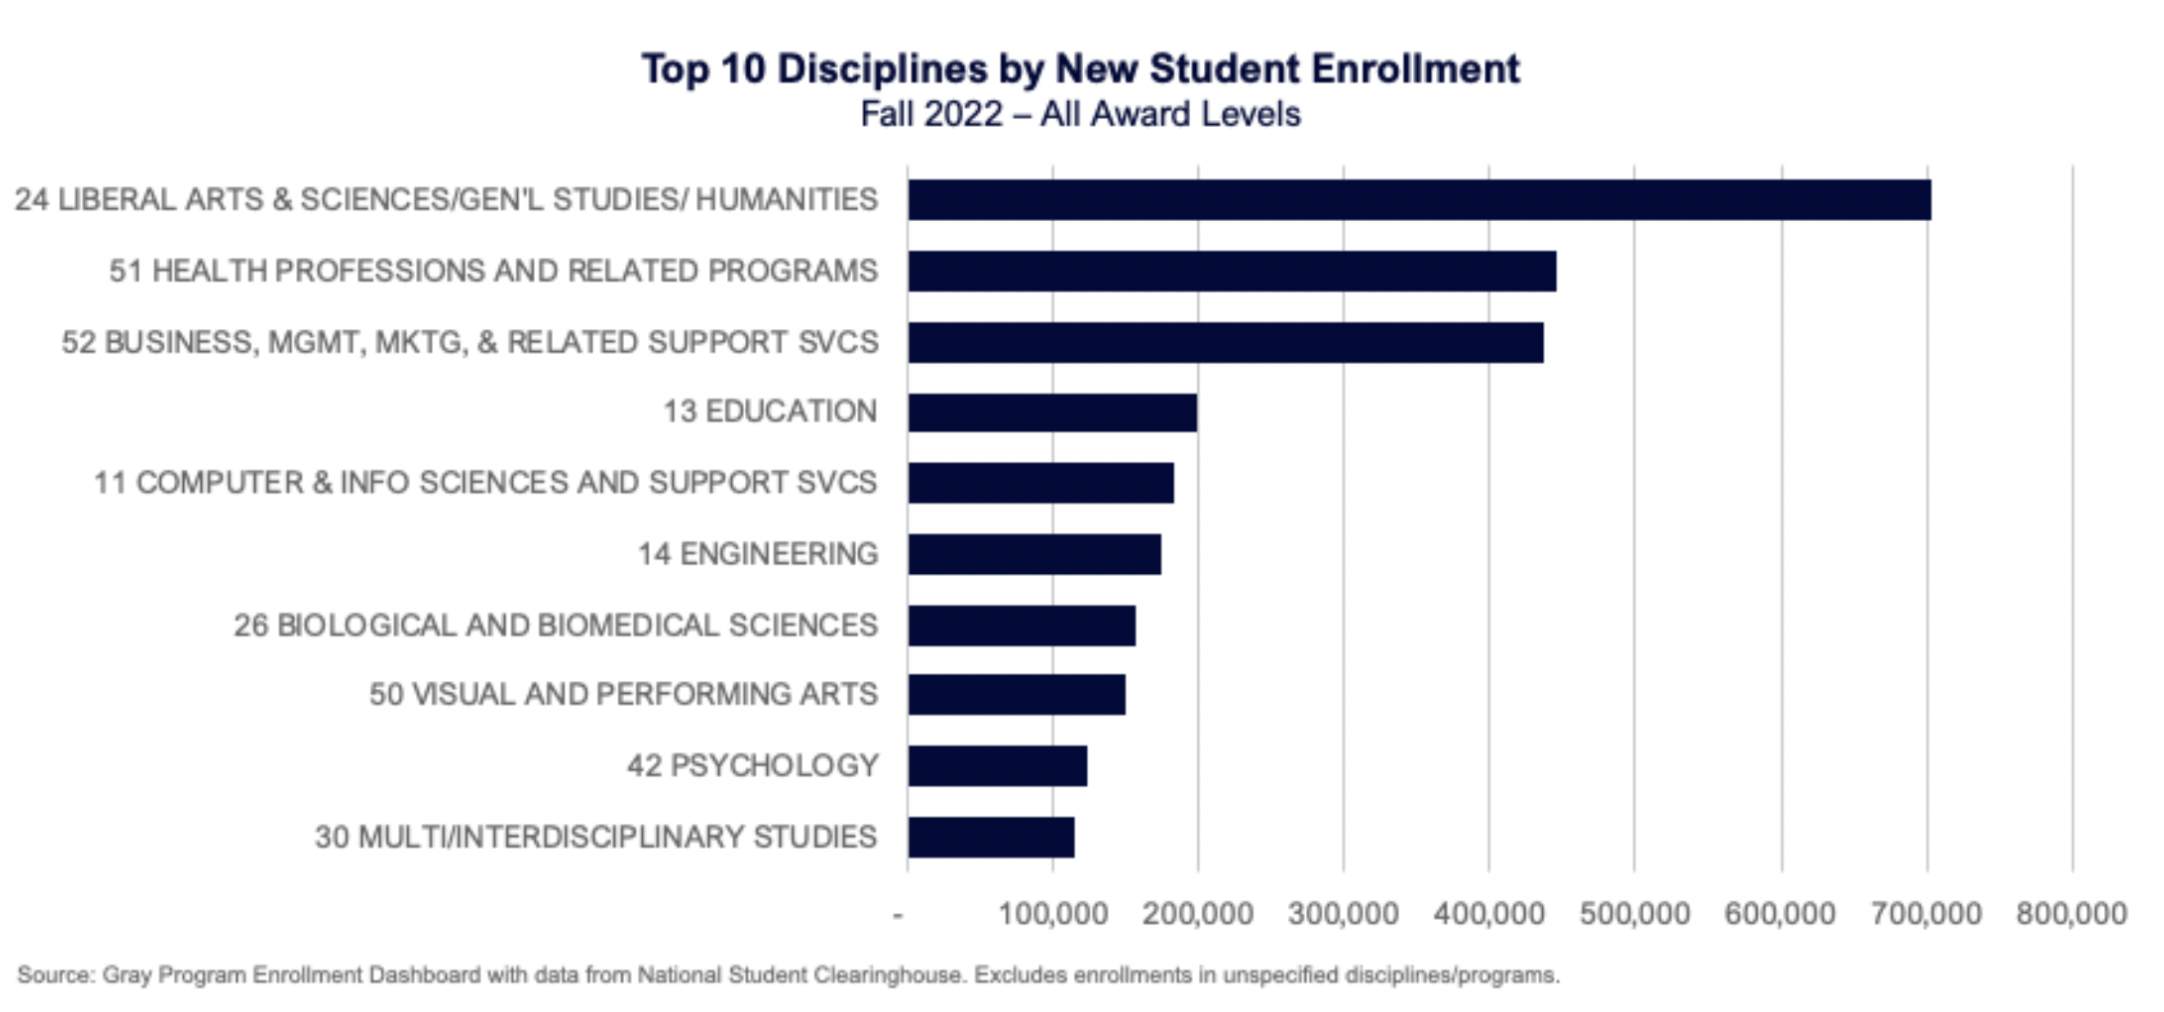 Top 10 Disciplines by New Student Enrollment